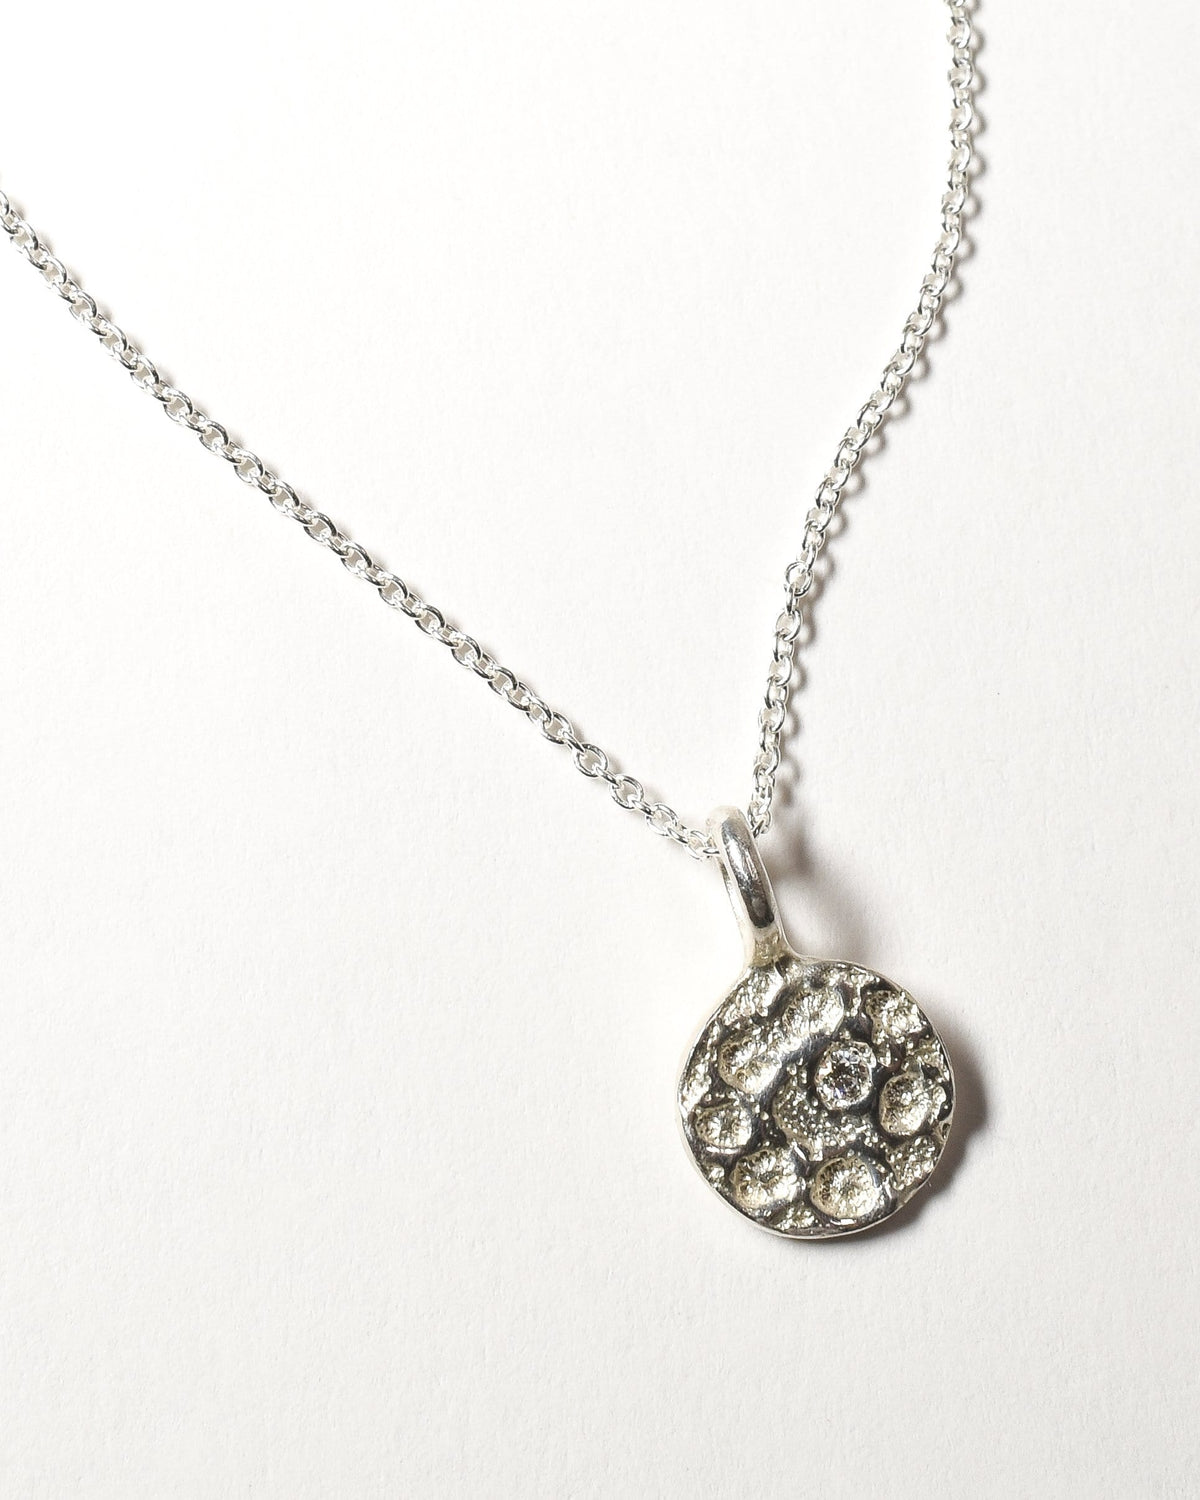 Diamond Birthstone Necklace - April - Sterling Silver